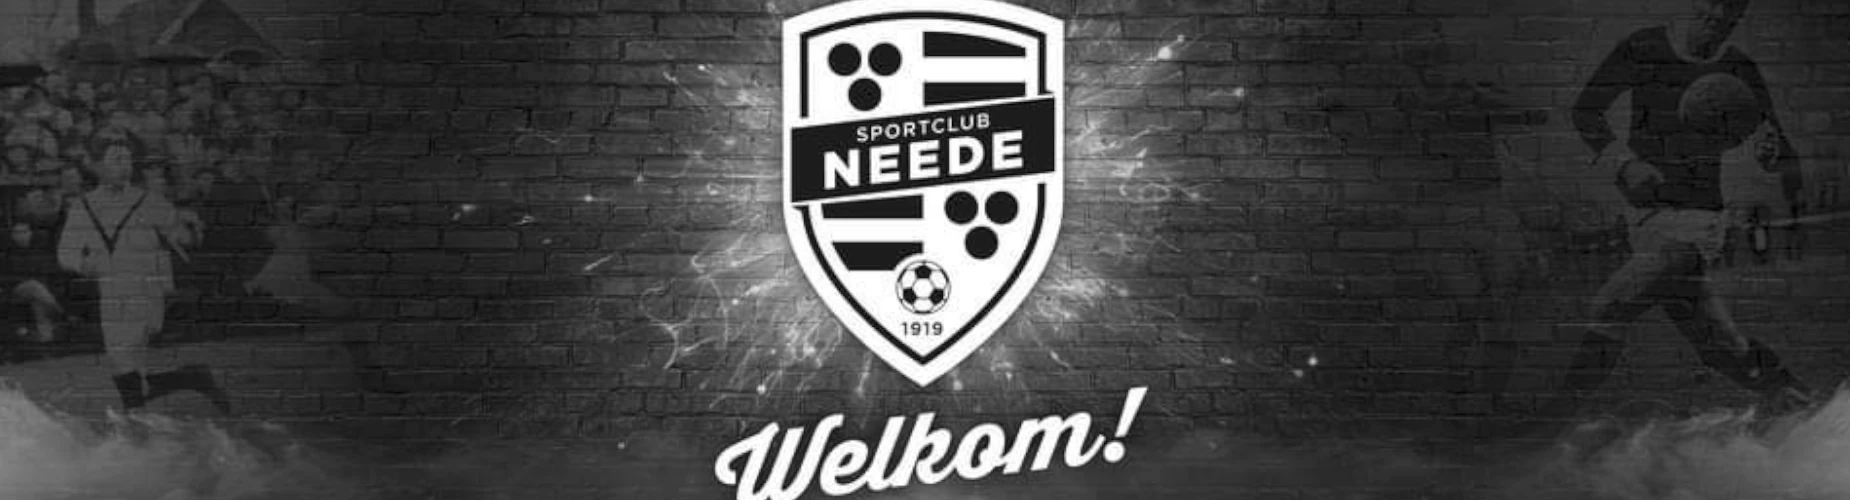 Banner - Sportclub Neede - Neede